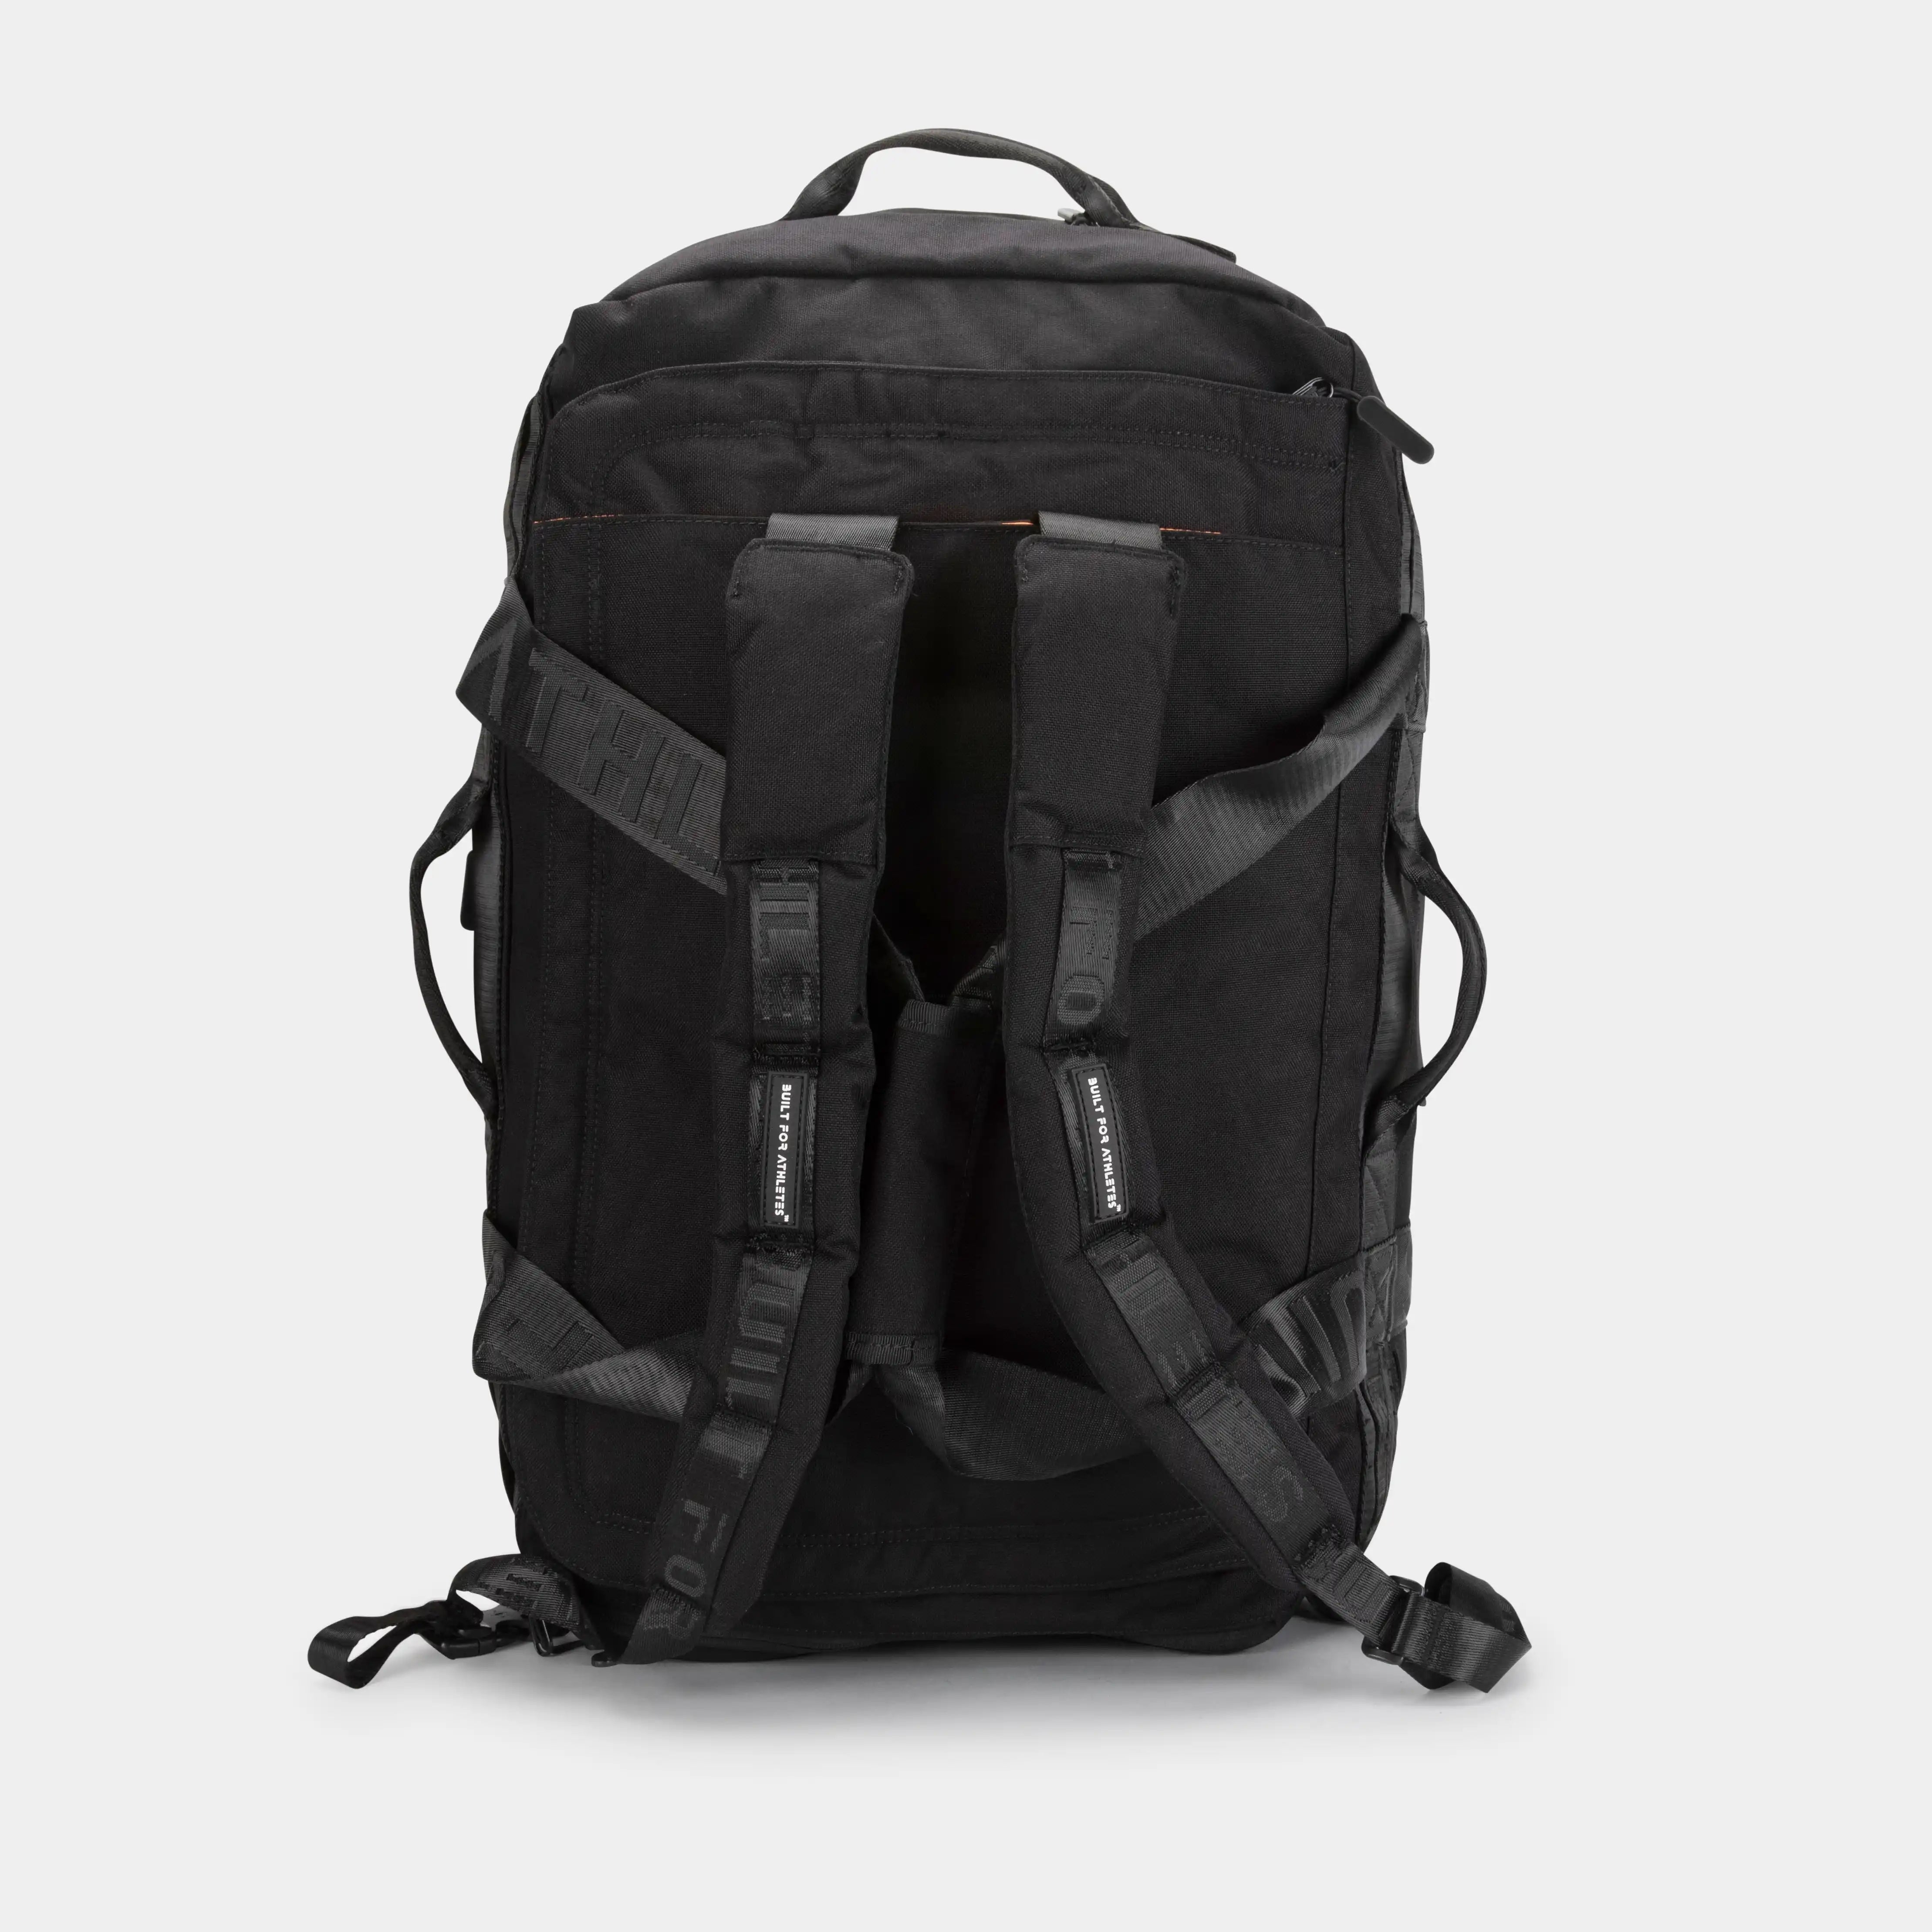 Built for Athletes™ Duffel Bag Pro Series 60L Duffel Bag